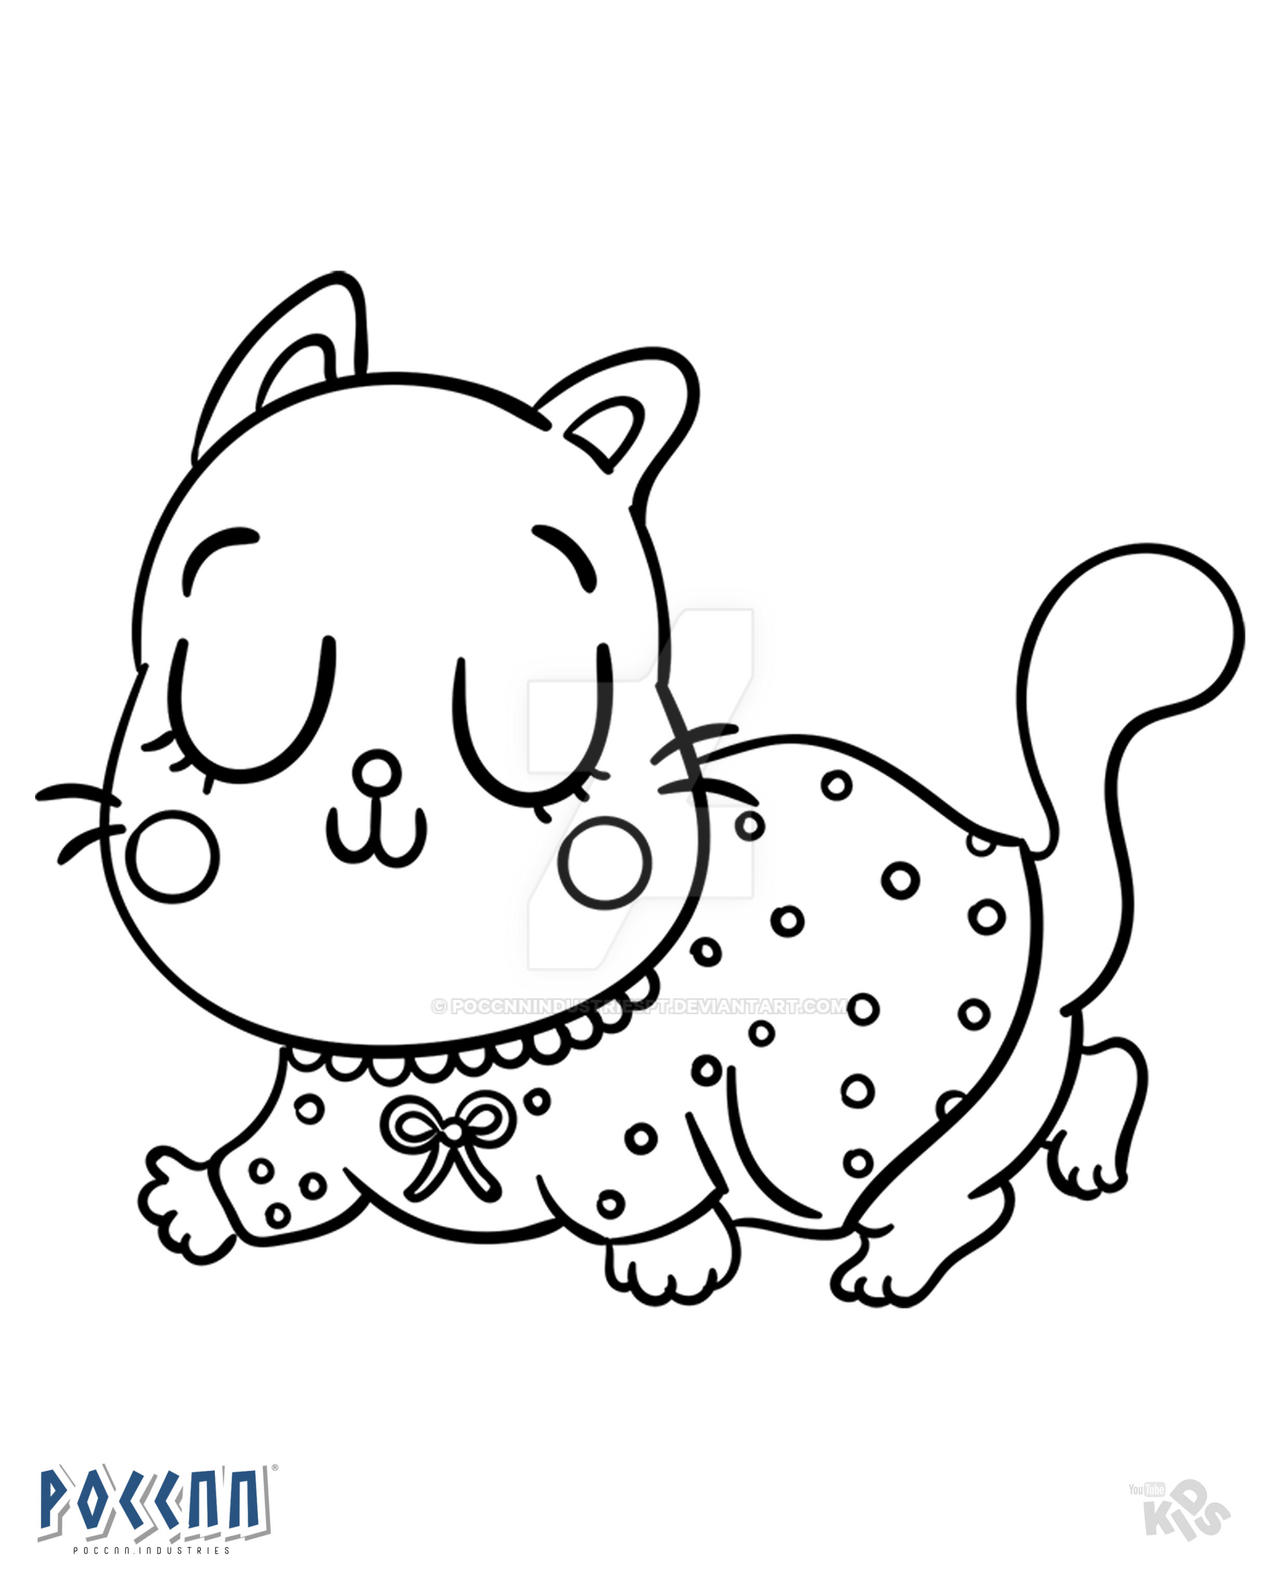 Mochila de gato Kawaii para colorir by PoccnnIndustriesPT on DeviantArt